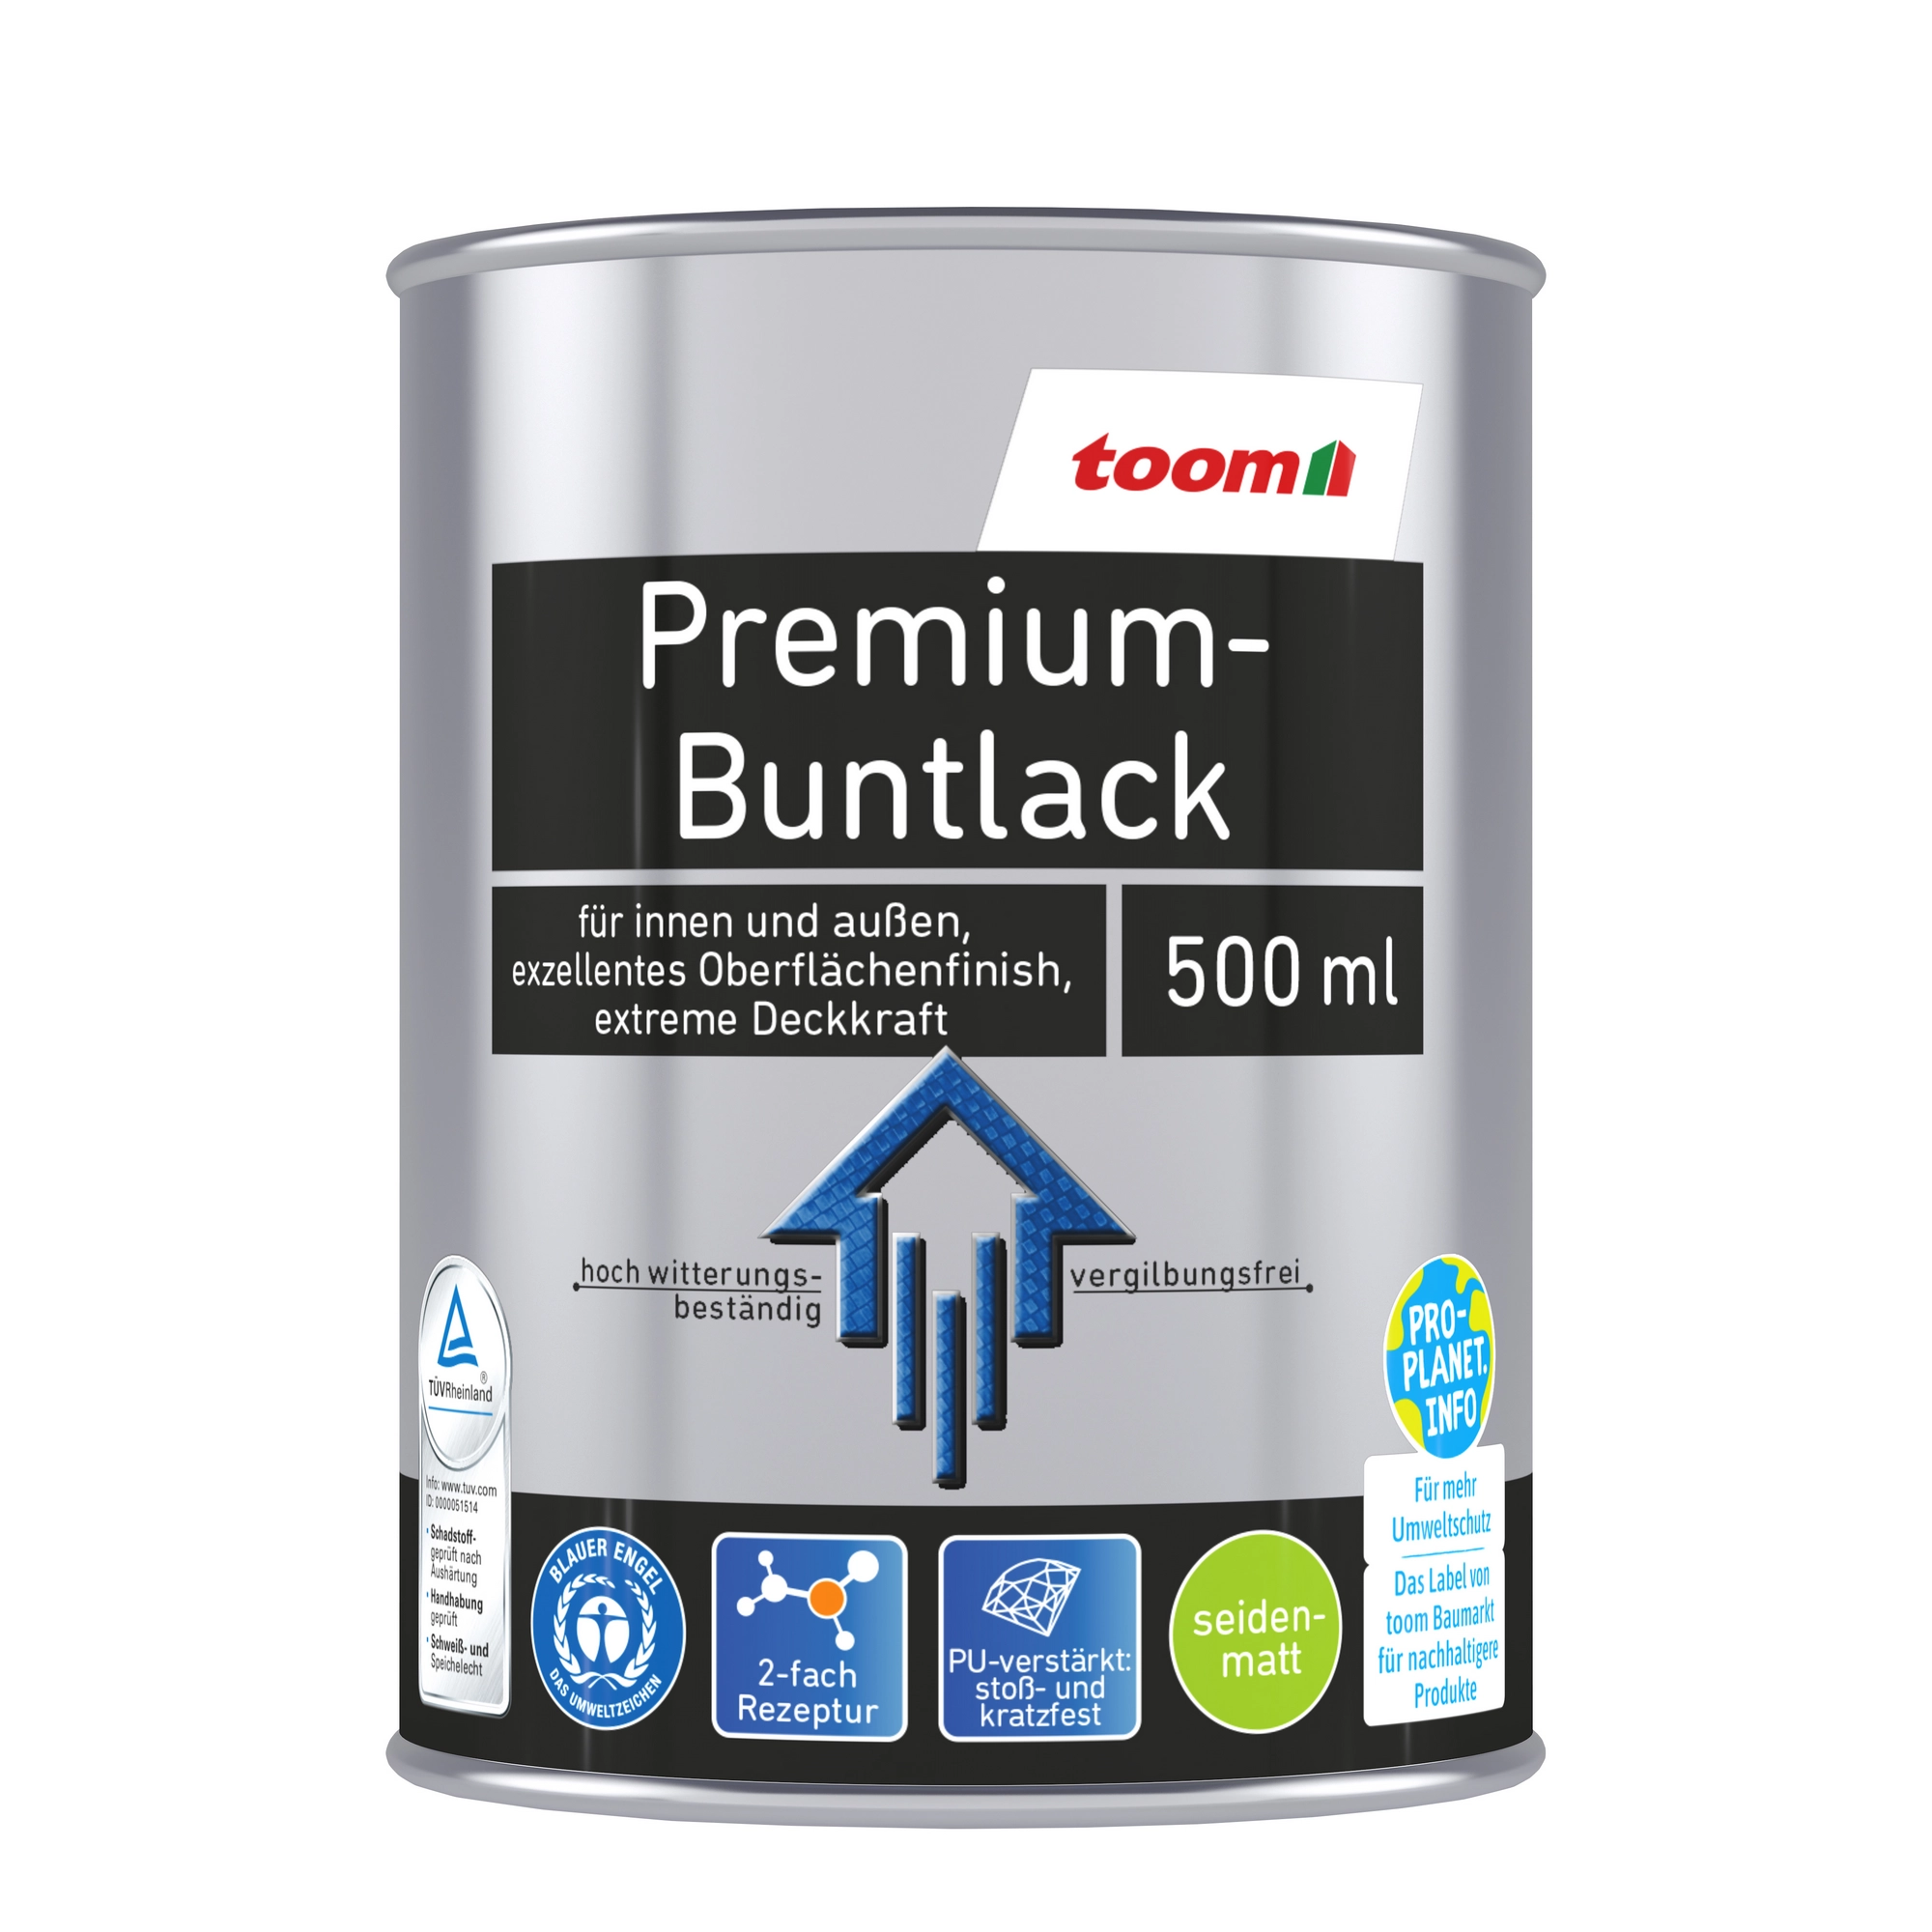 toom Premium-Buntlack reinweiß seidenmatt 500 ml